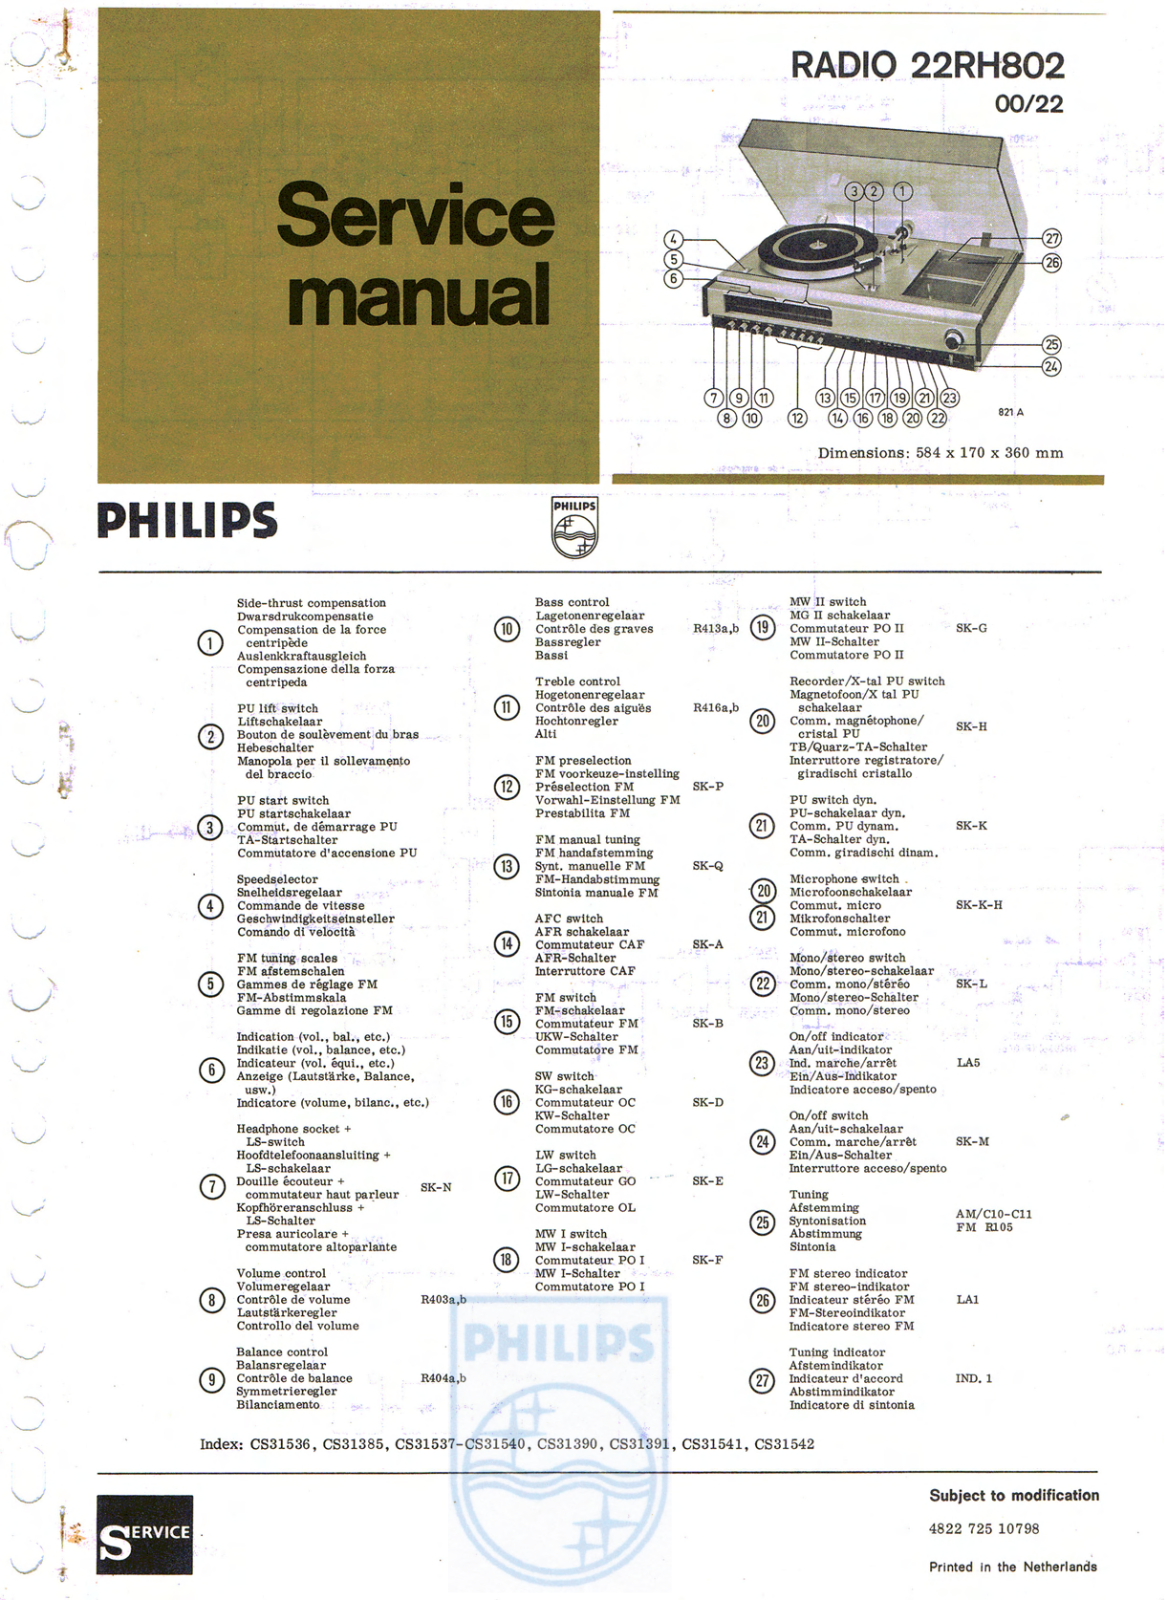 Philips 22-RH-802 Service Manual